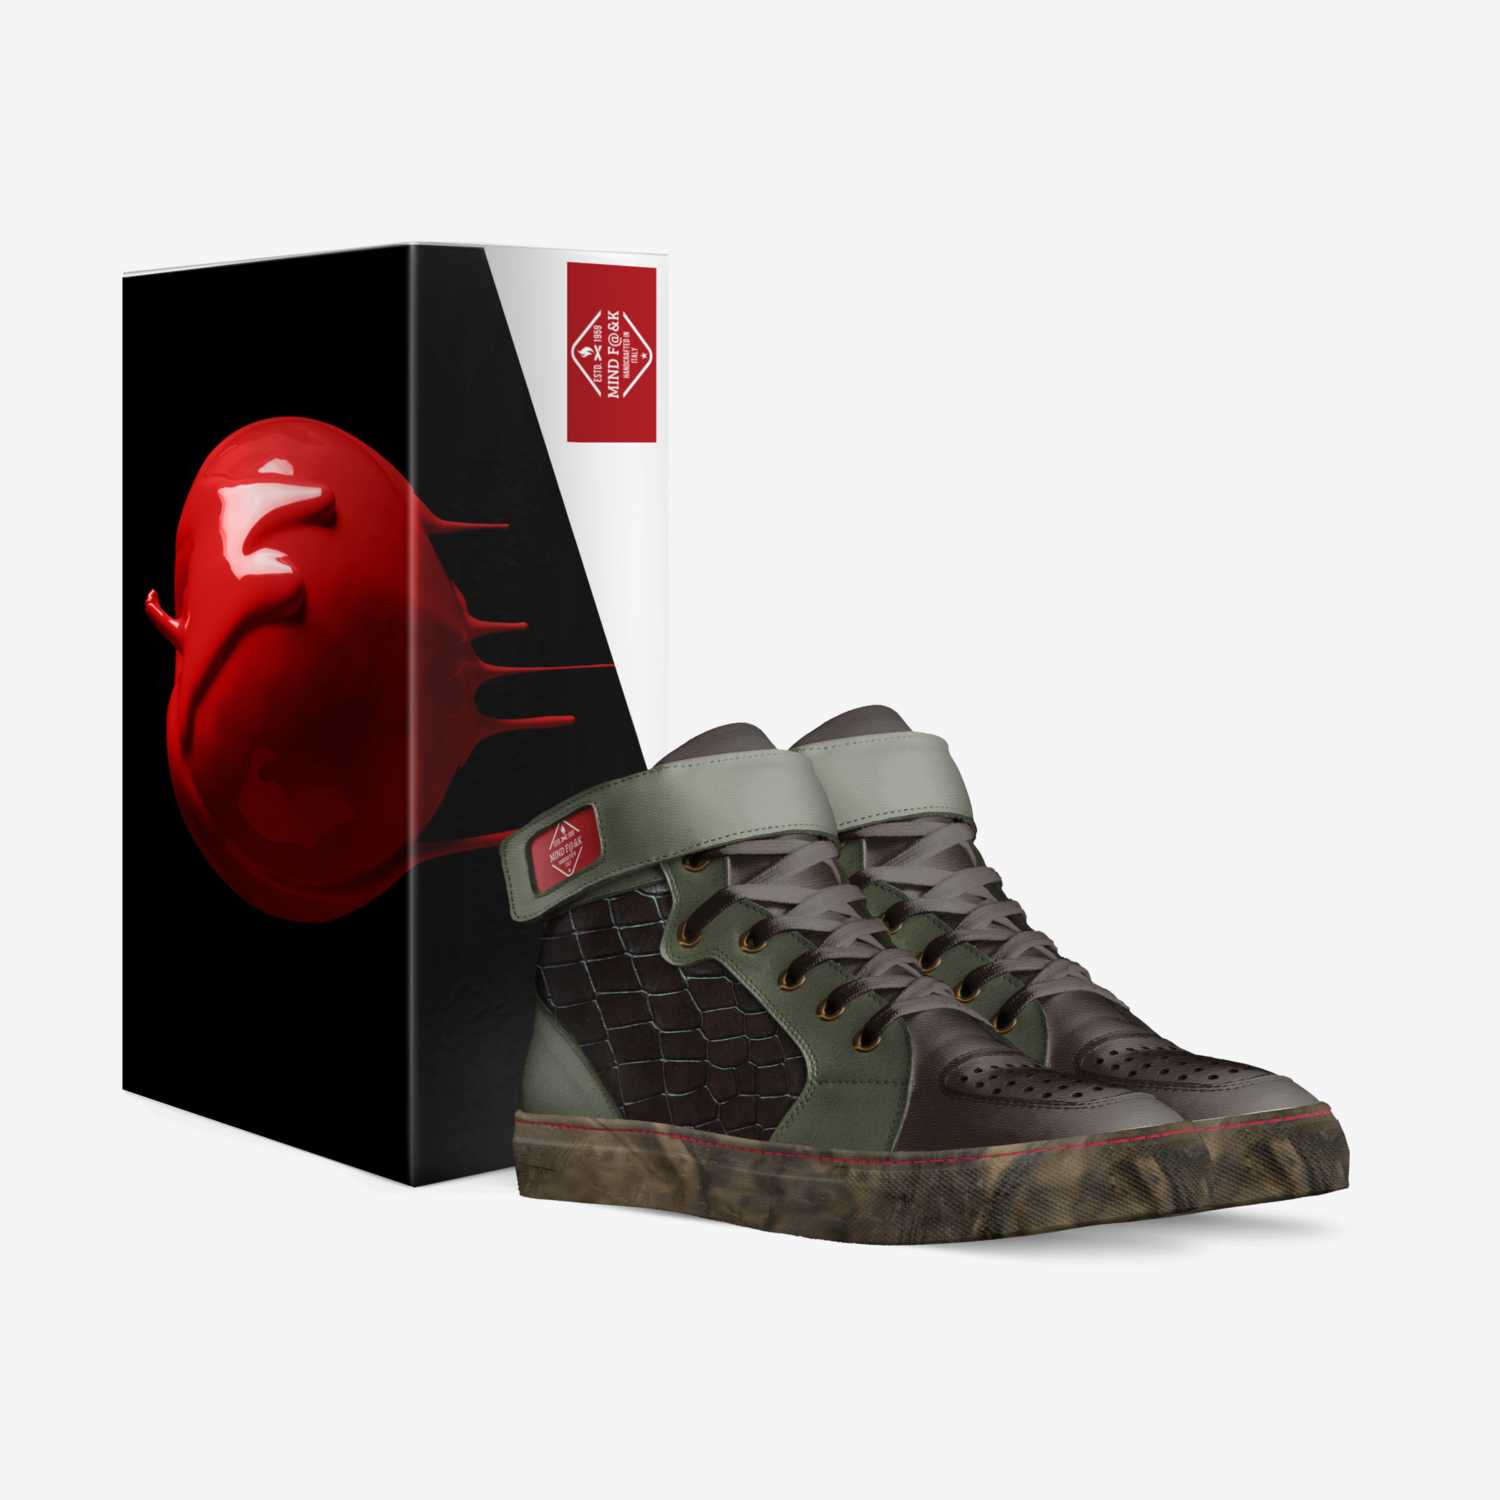 Mind F@&K custom made in Italy shoes by Sacha Raeburn | Box view